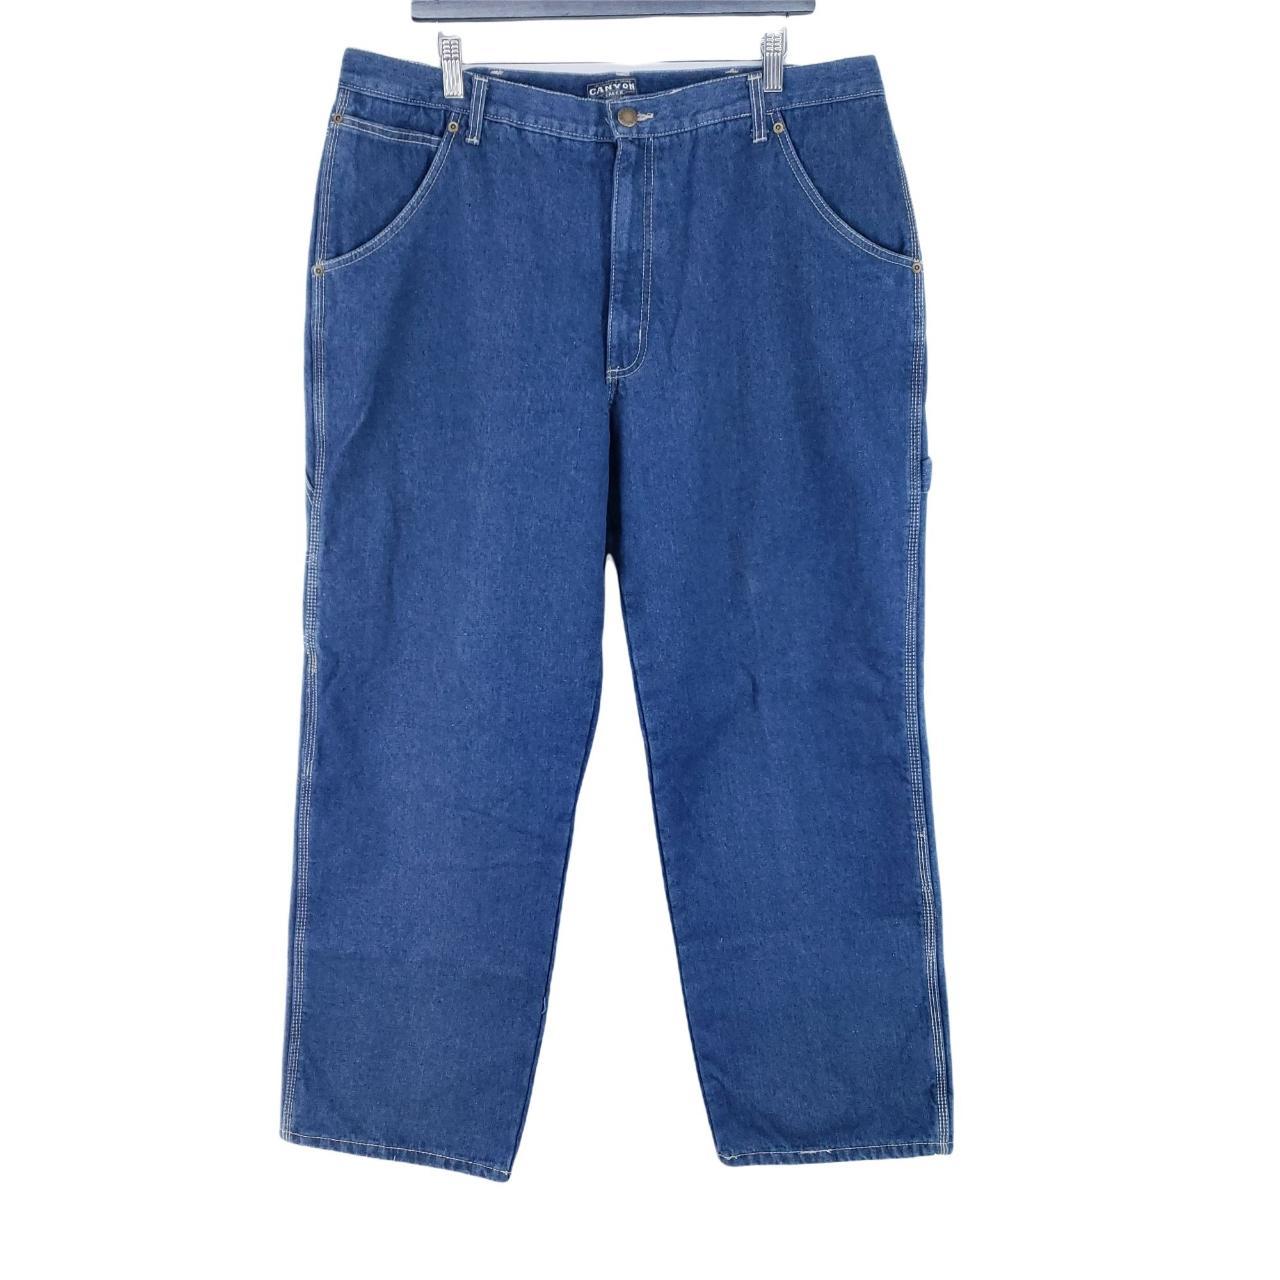 Canyon Creek Flannel Lined Jeans Men's Size 40x30... - Depop